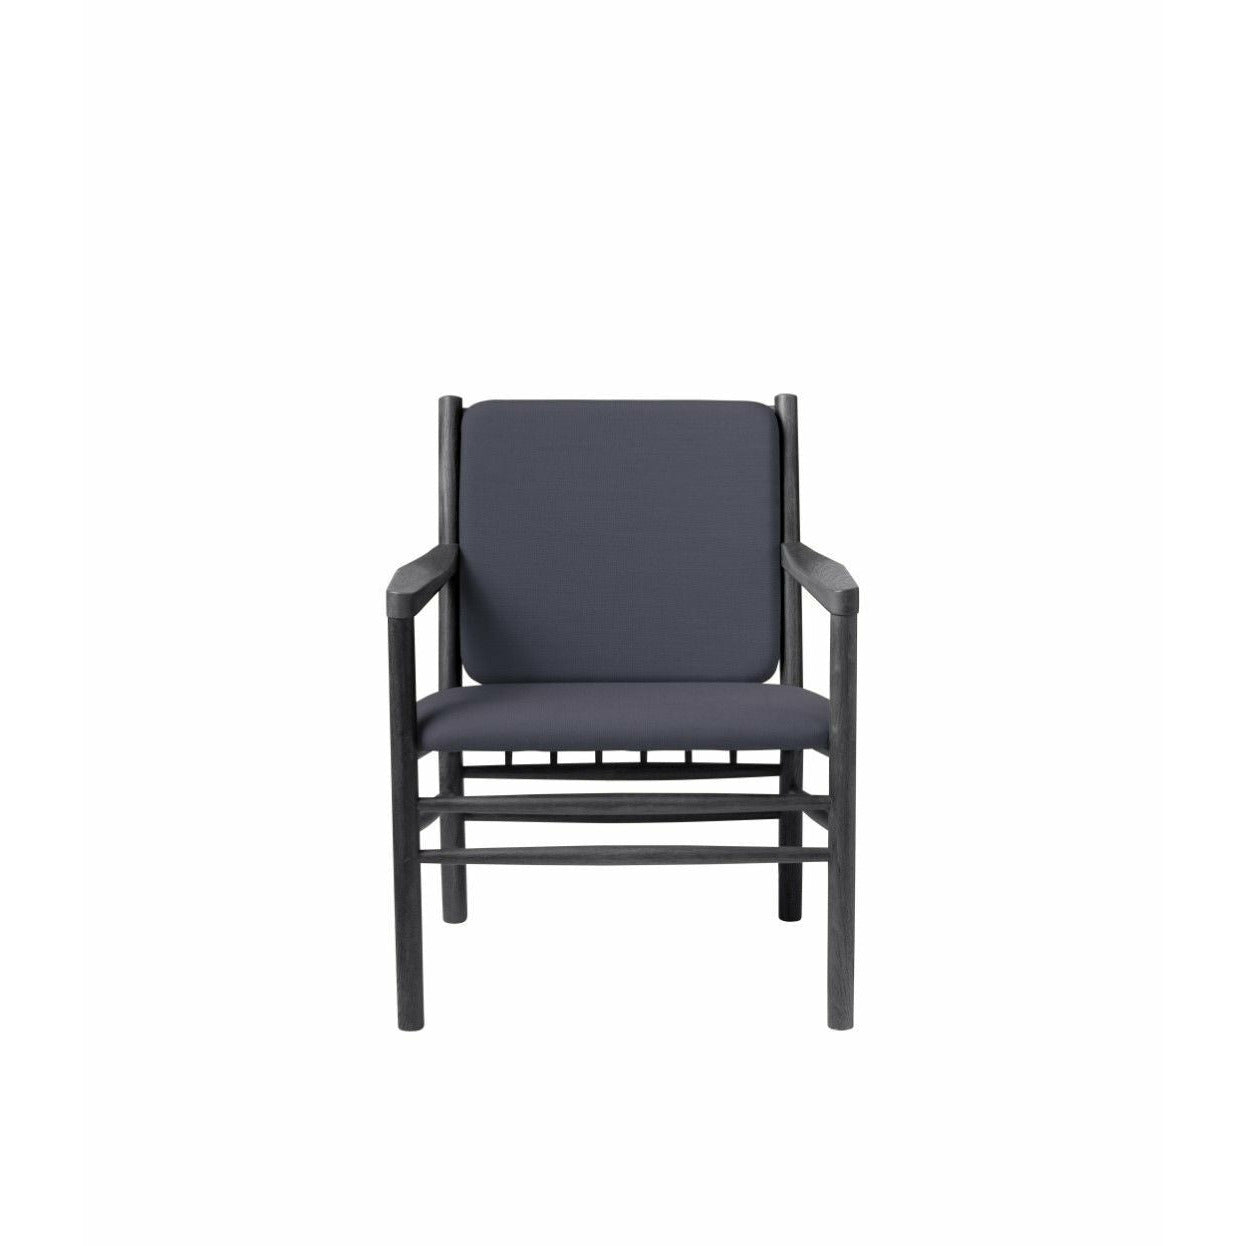 Fdb Møbler J147 Armchair, Black/Dark Blue